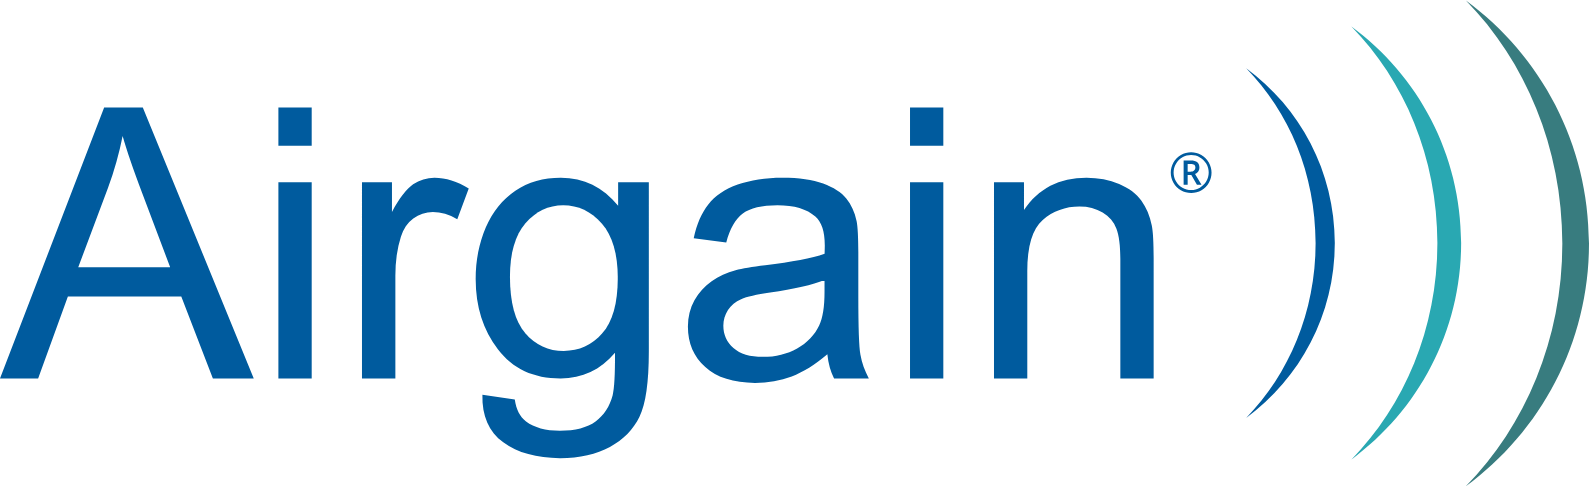 Airgain logo large (transparent PNG)